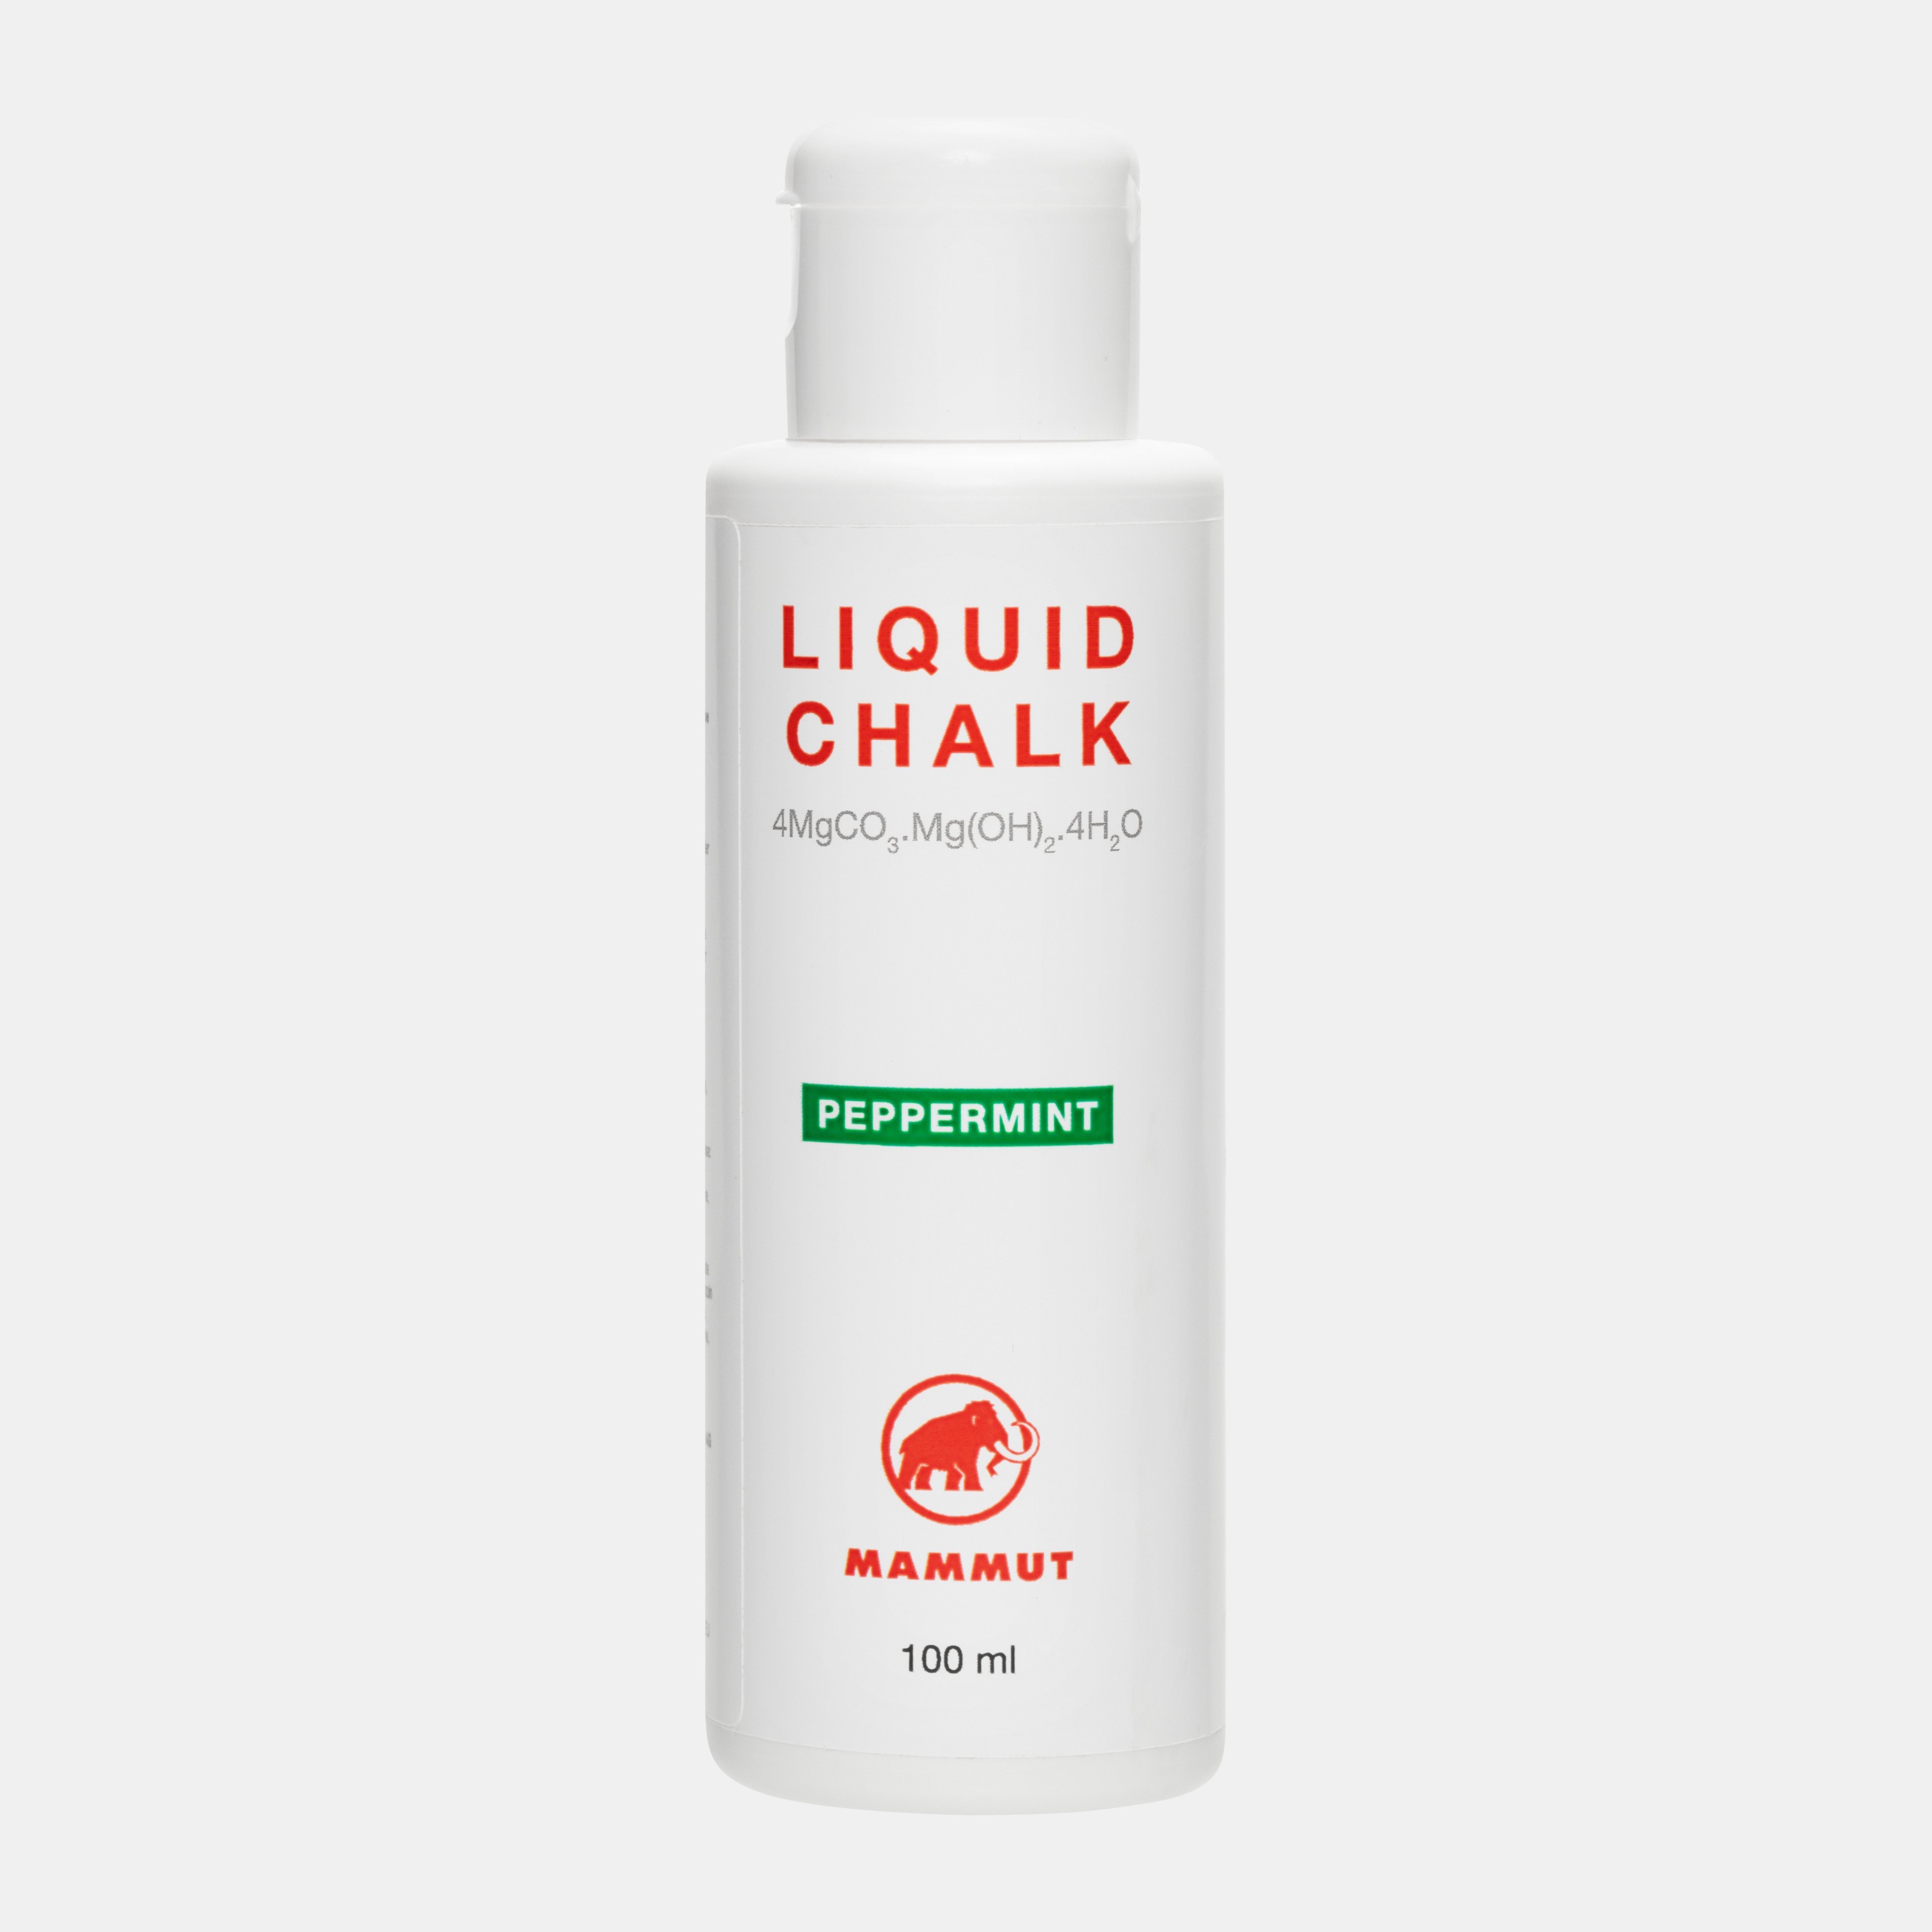 Liquid Chalk Peppermint 100 ml product image